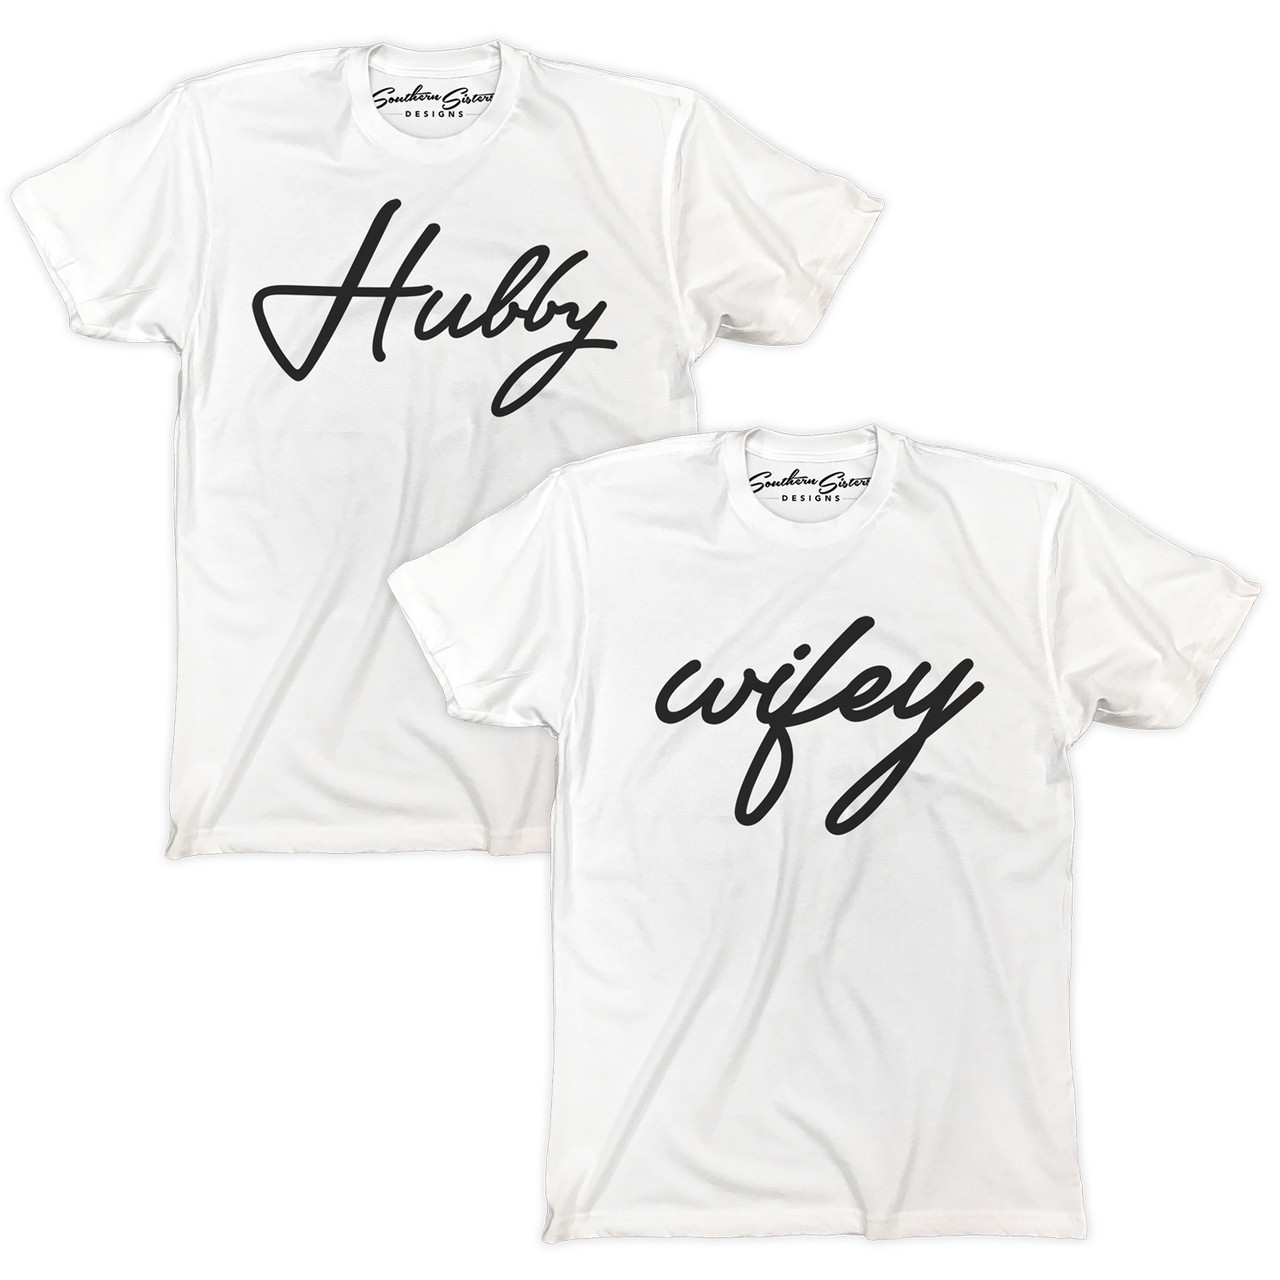 Hubby and Wifey Matching Shirt Set